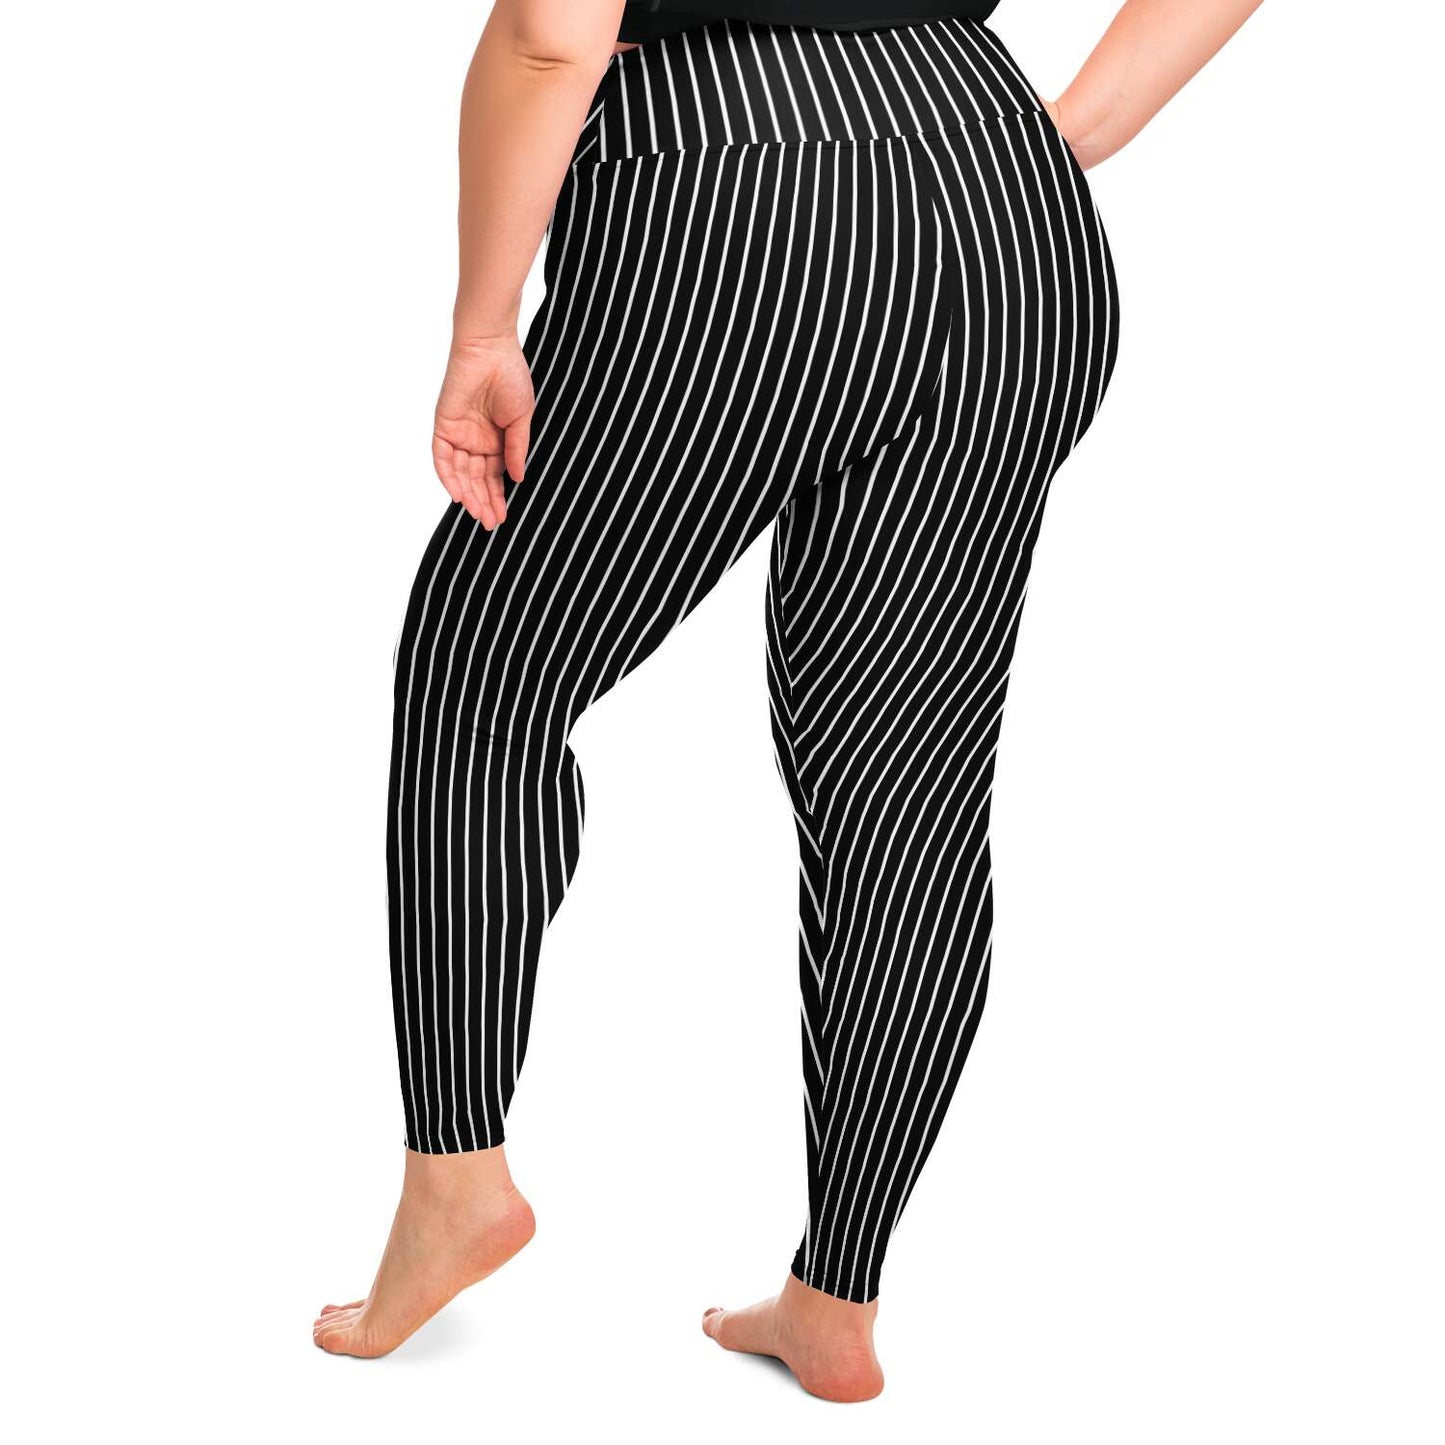 Black and White Pinstripe Plus Size Leggings For Women